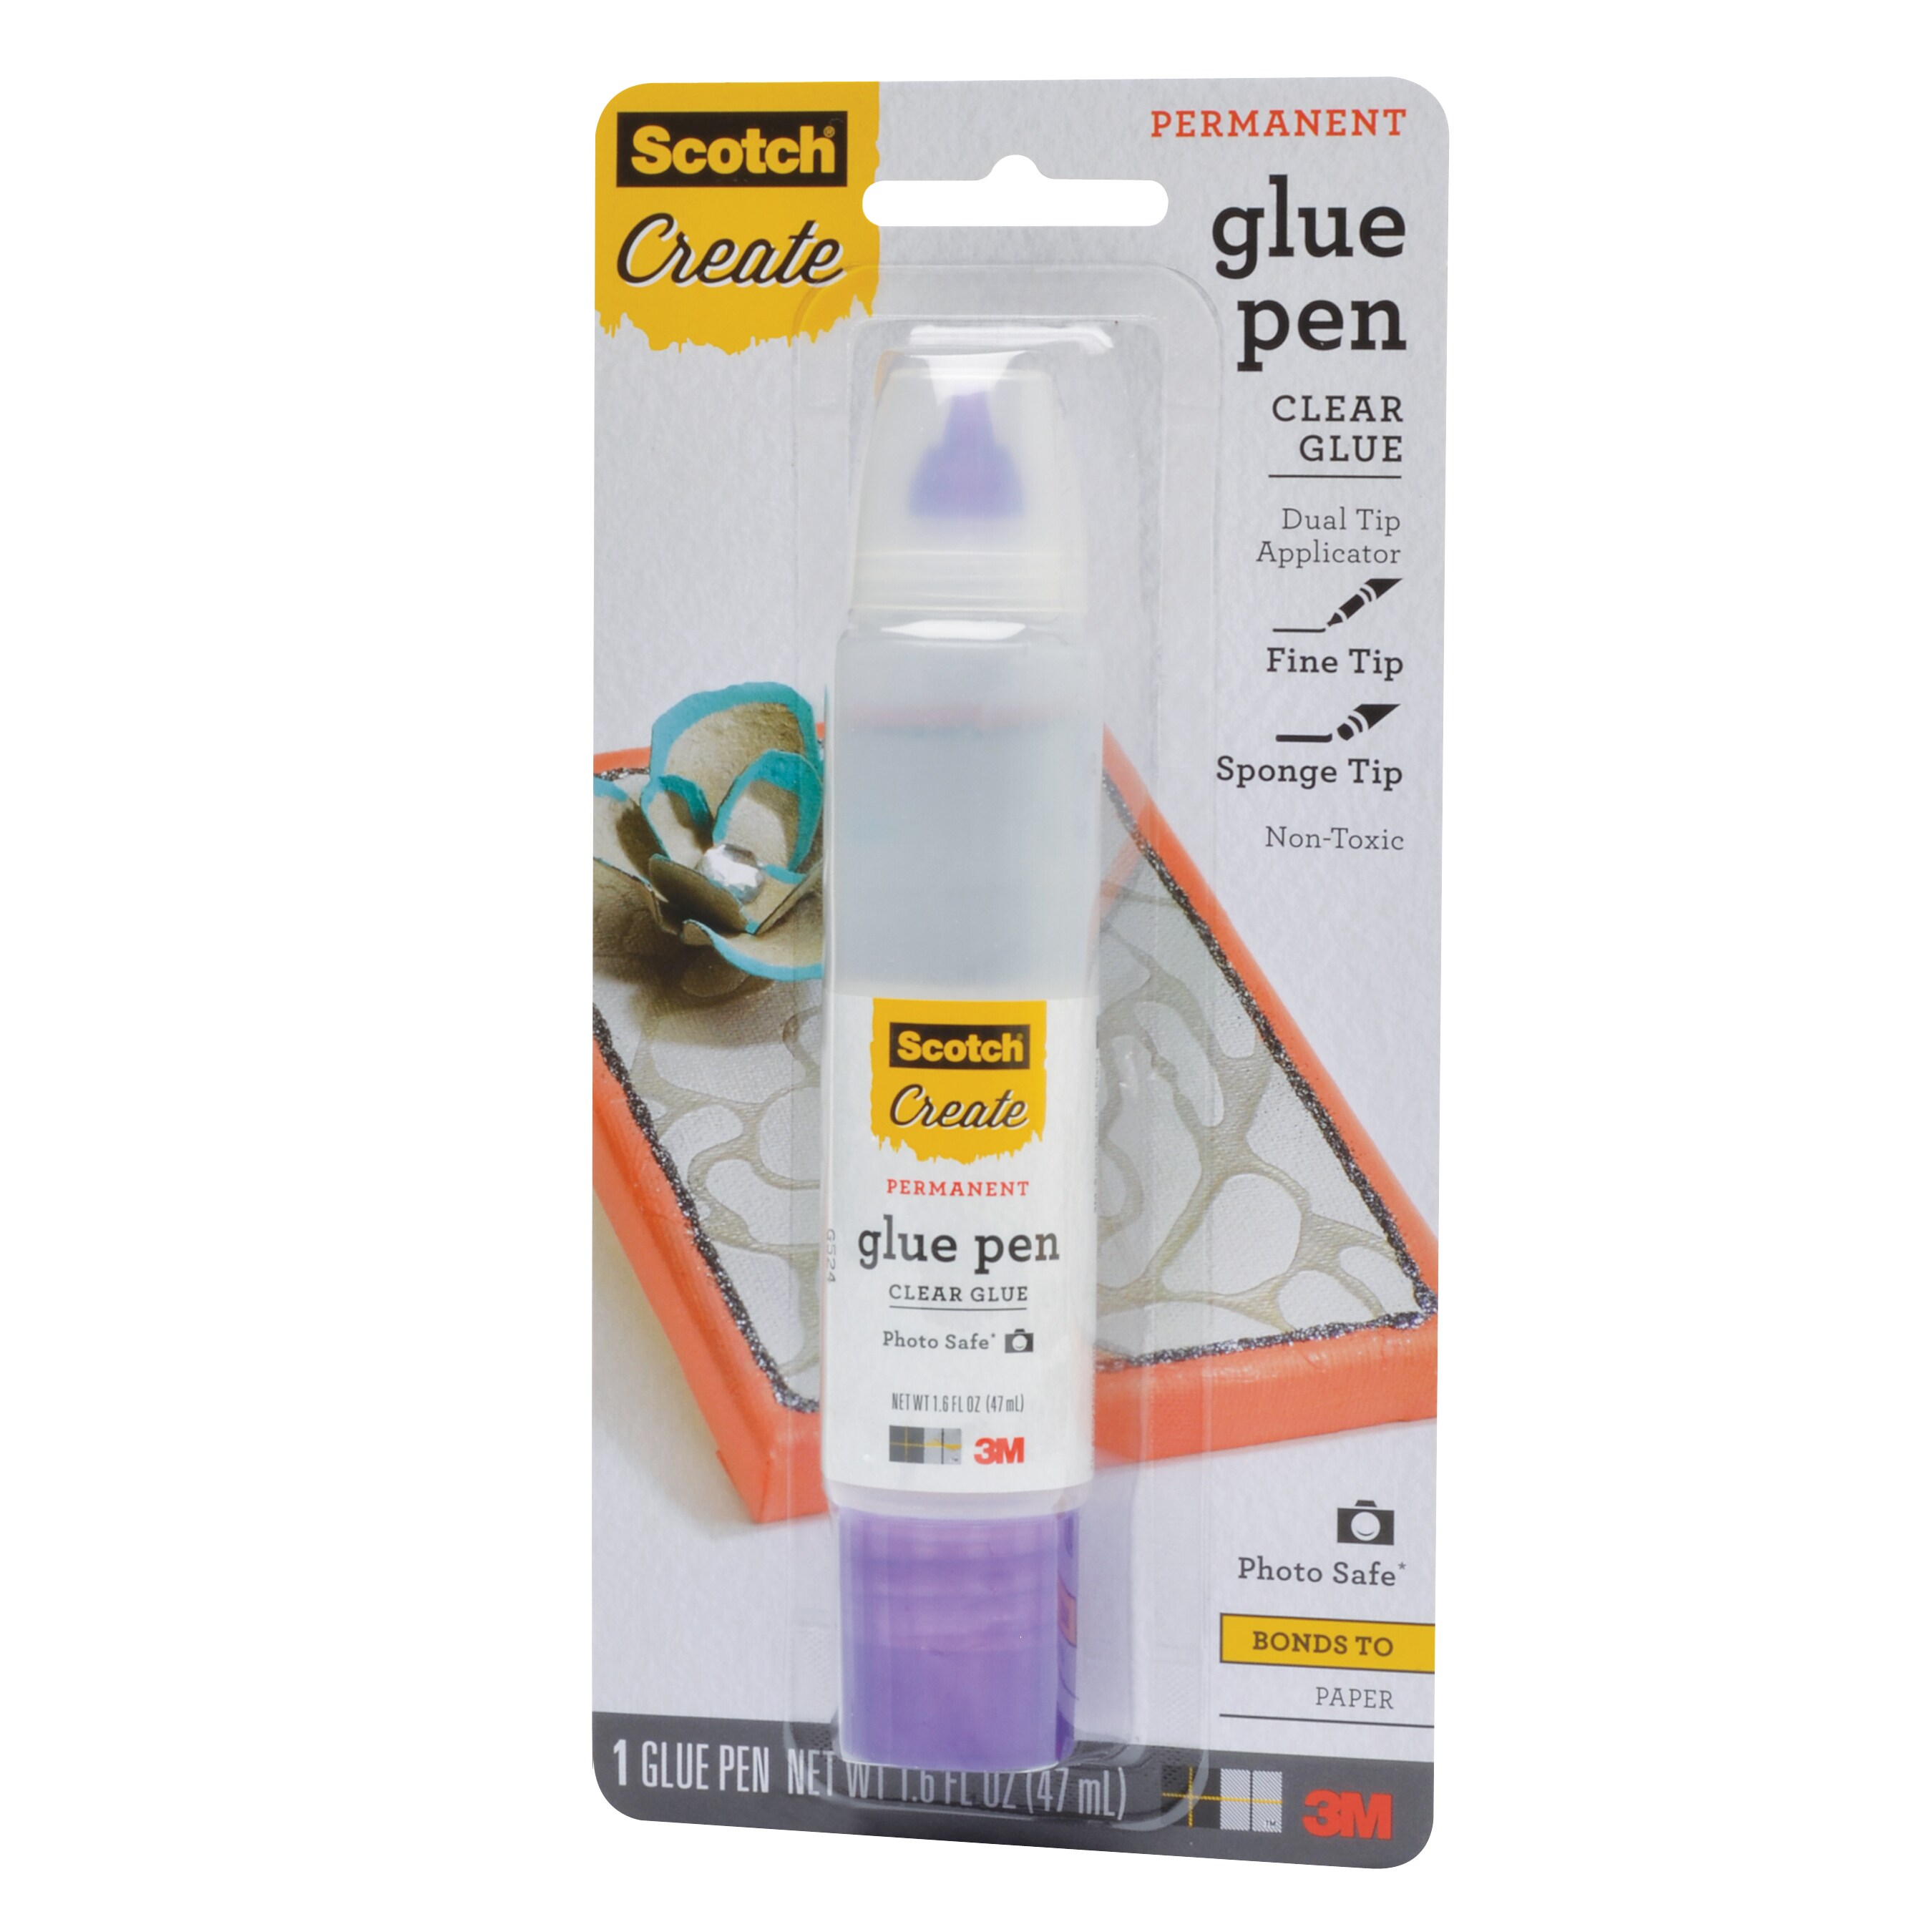 Product Number 019-CFT | Scotch® Glue Pen 019-CFT